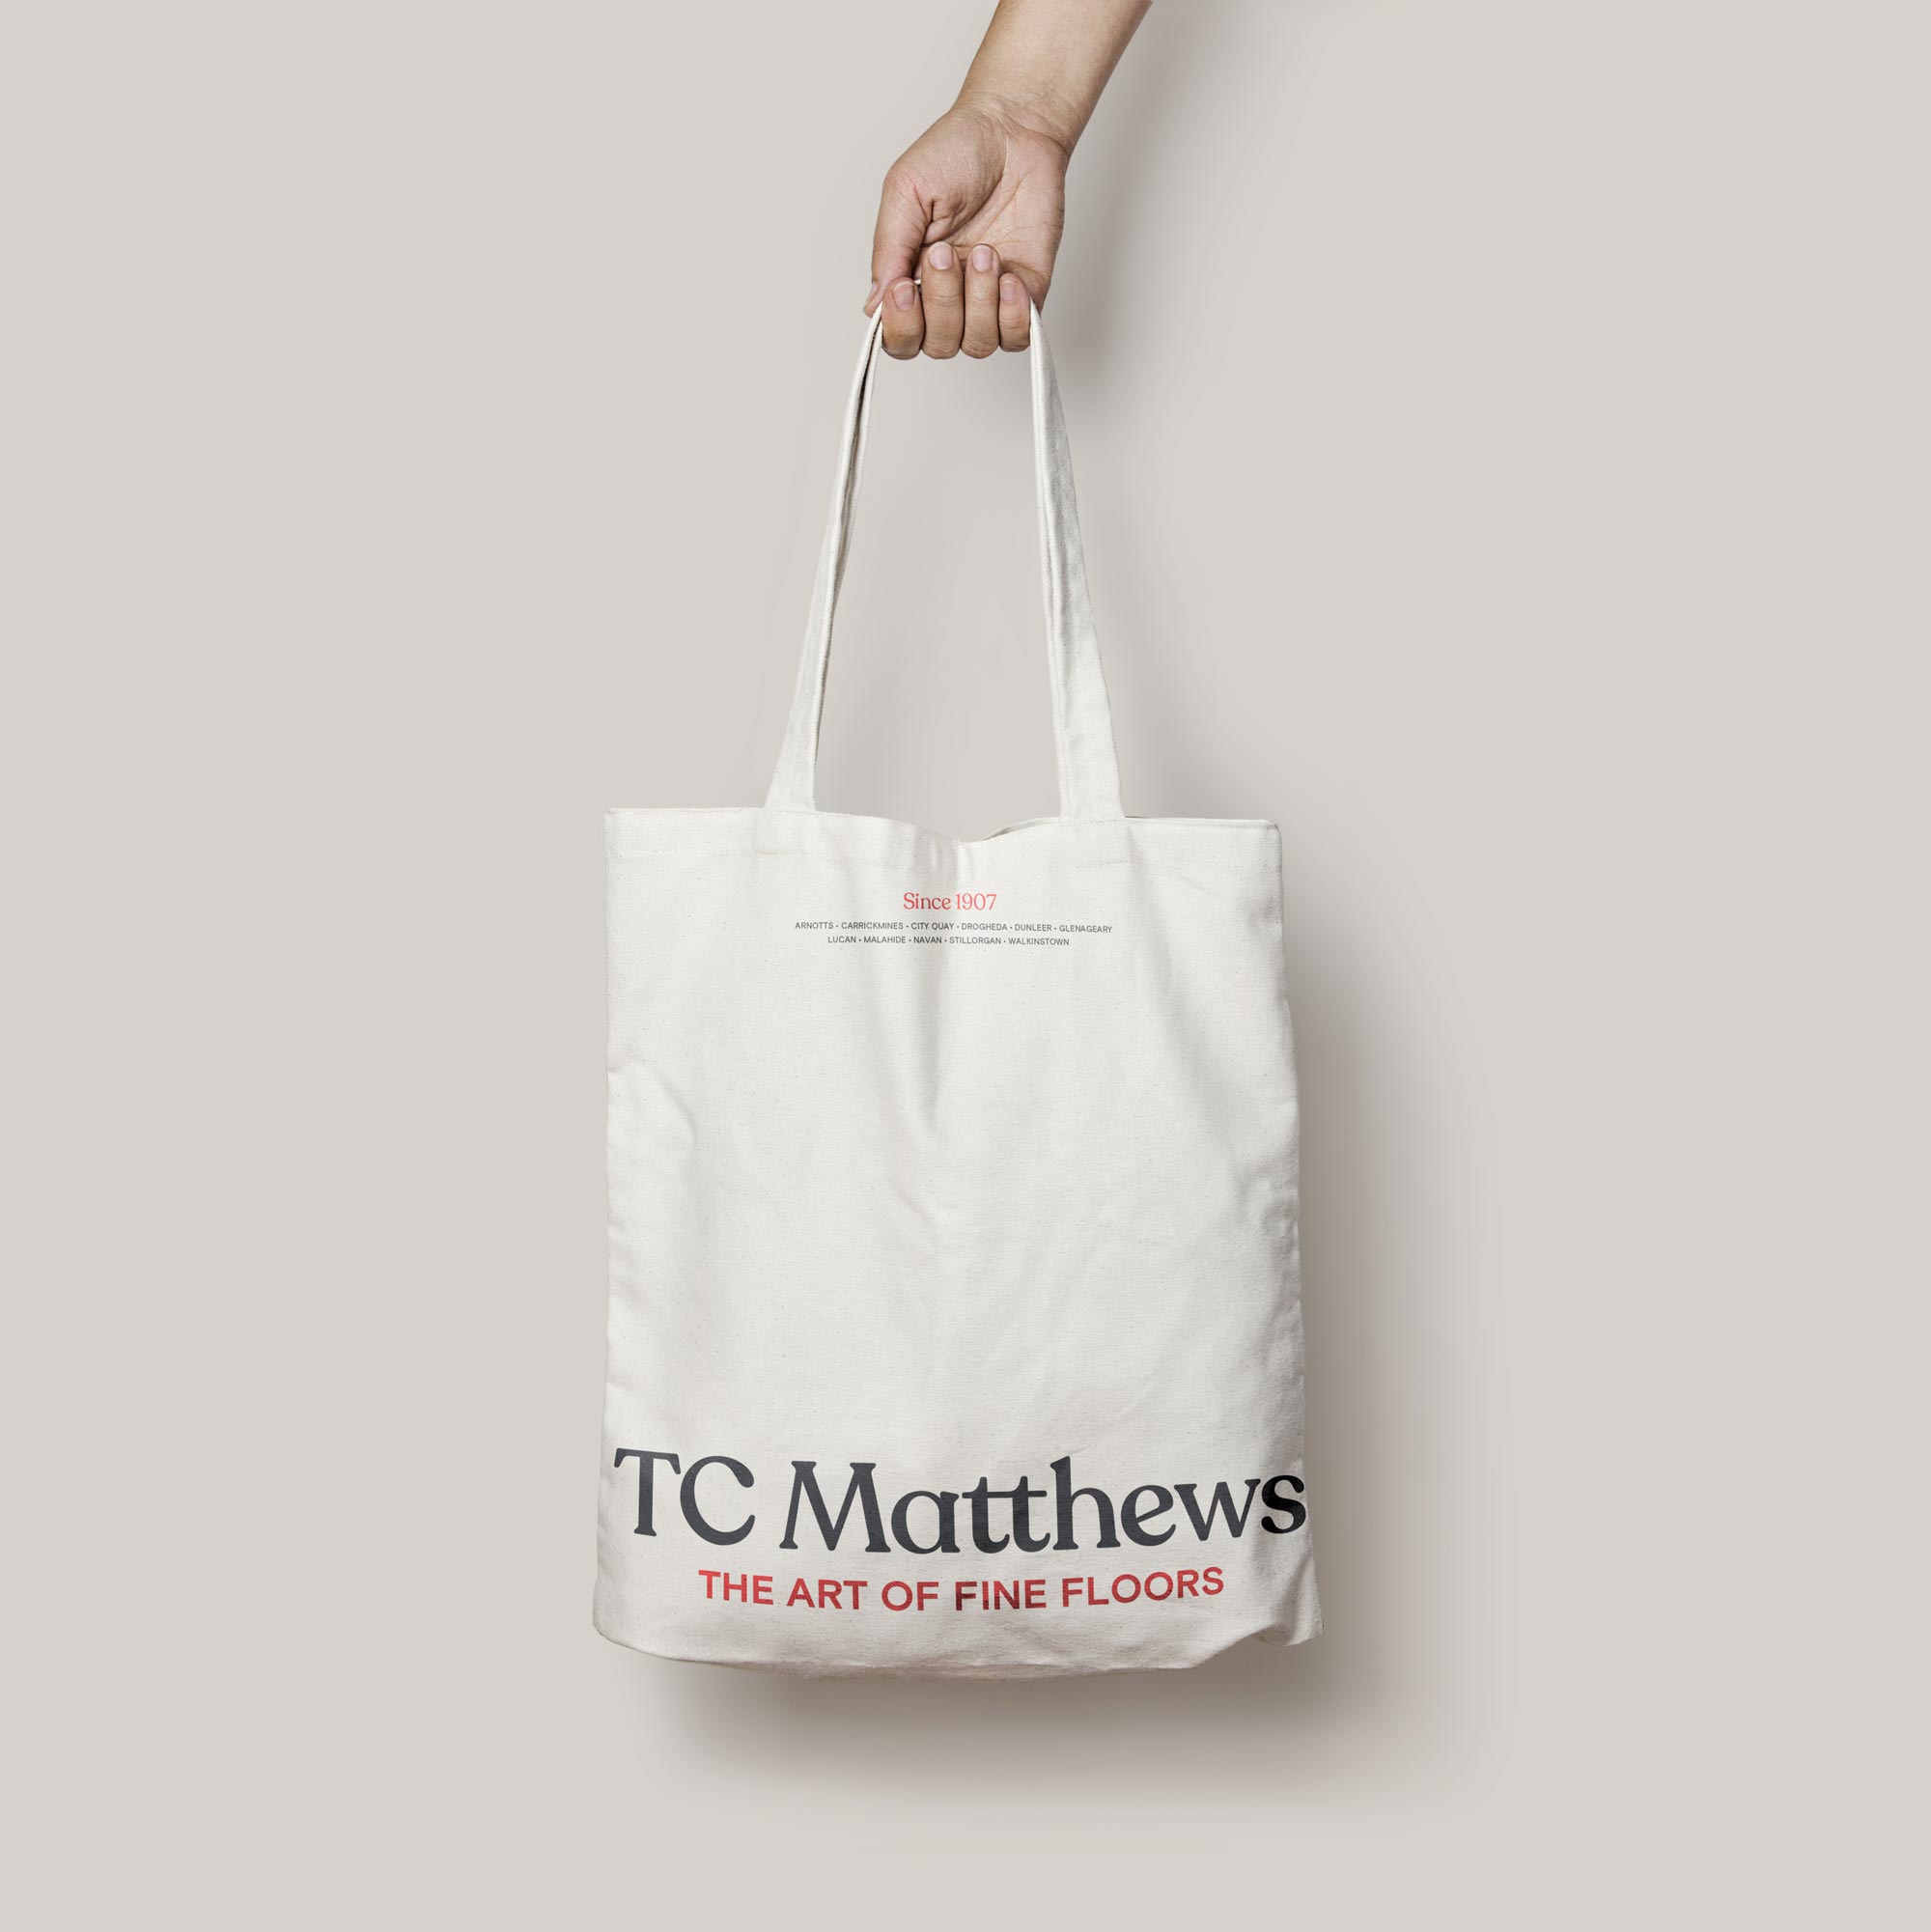 Brand design for TC Matthews, logo and branding on tote bag